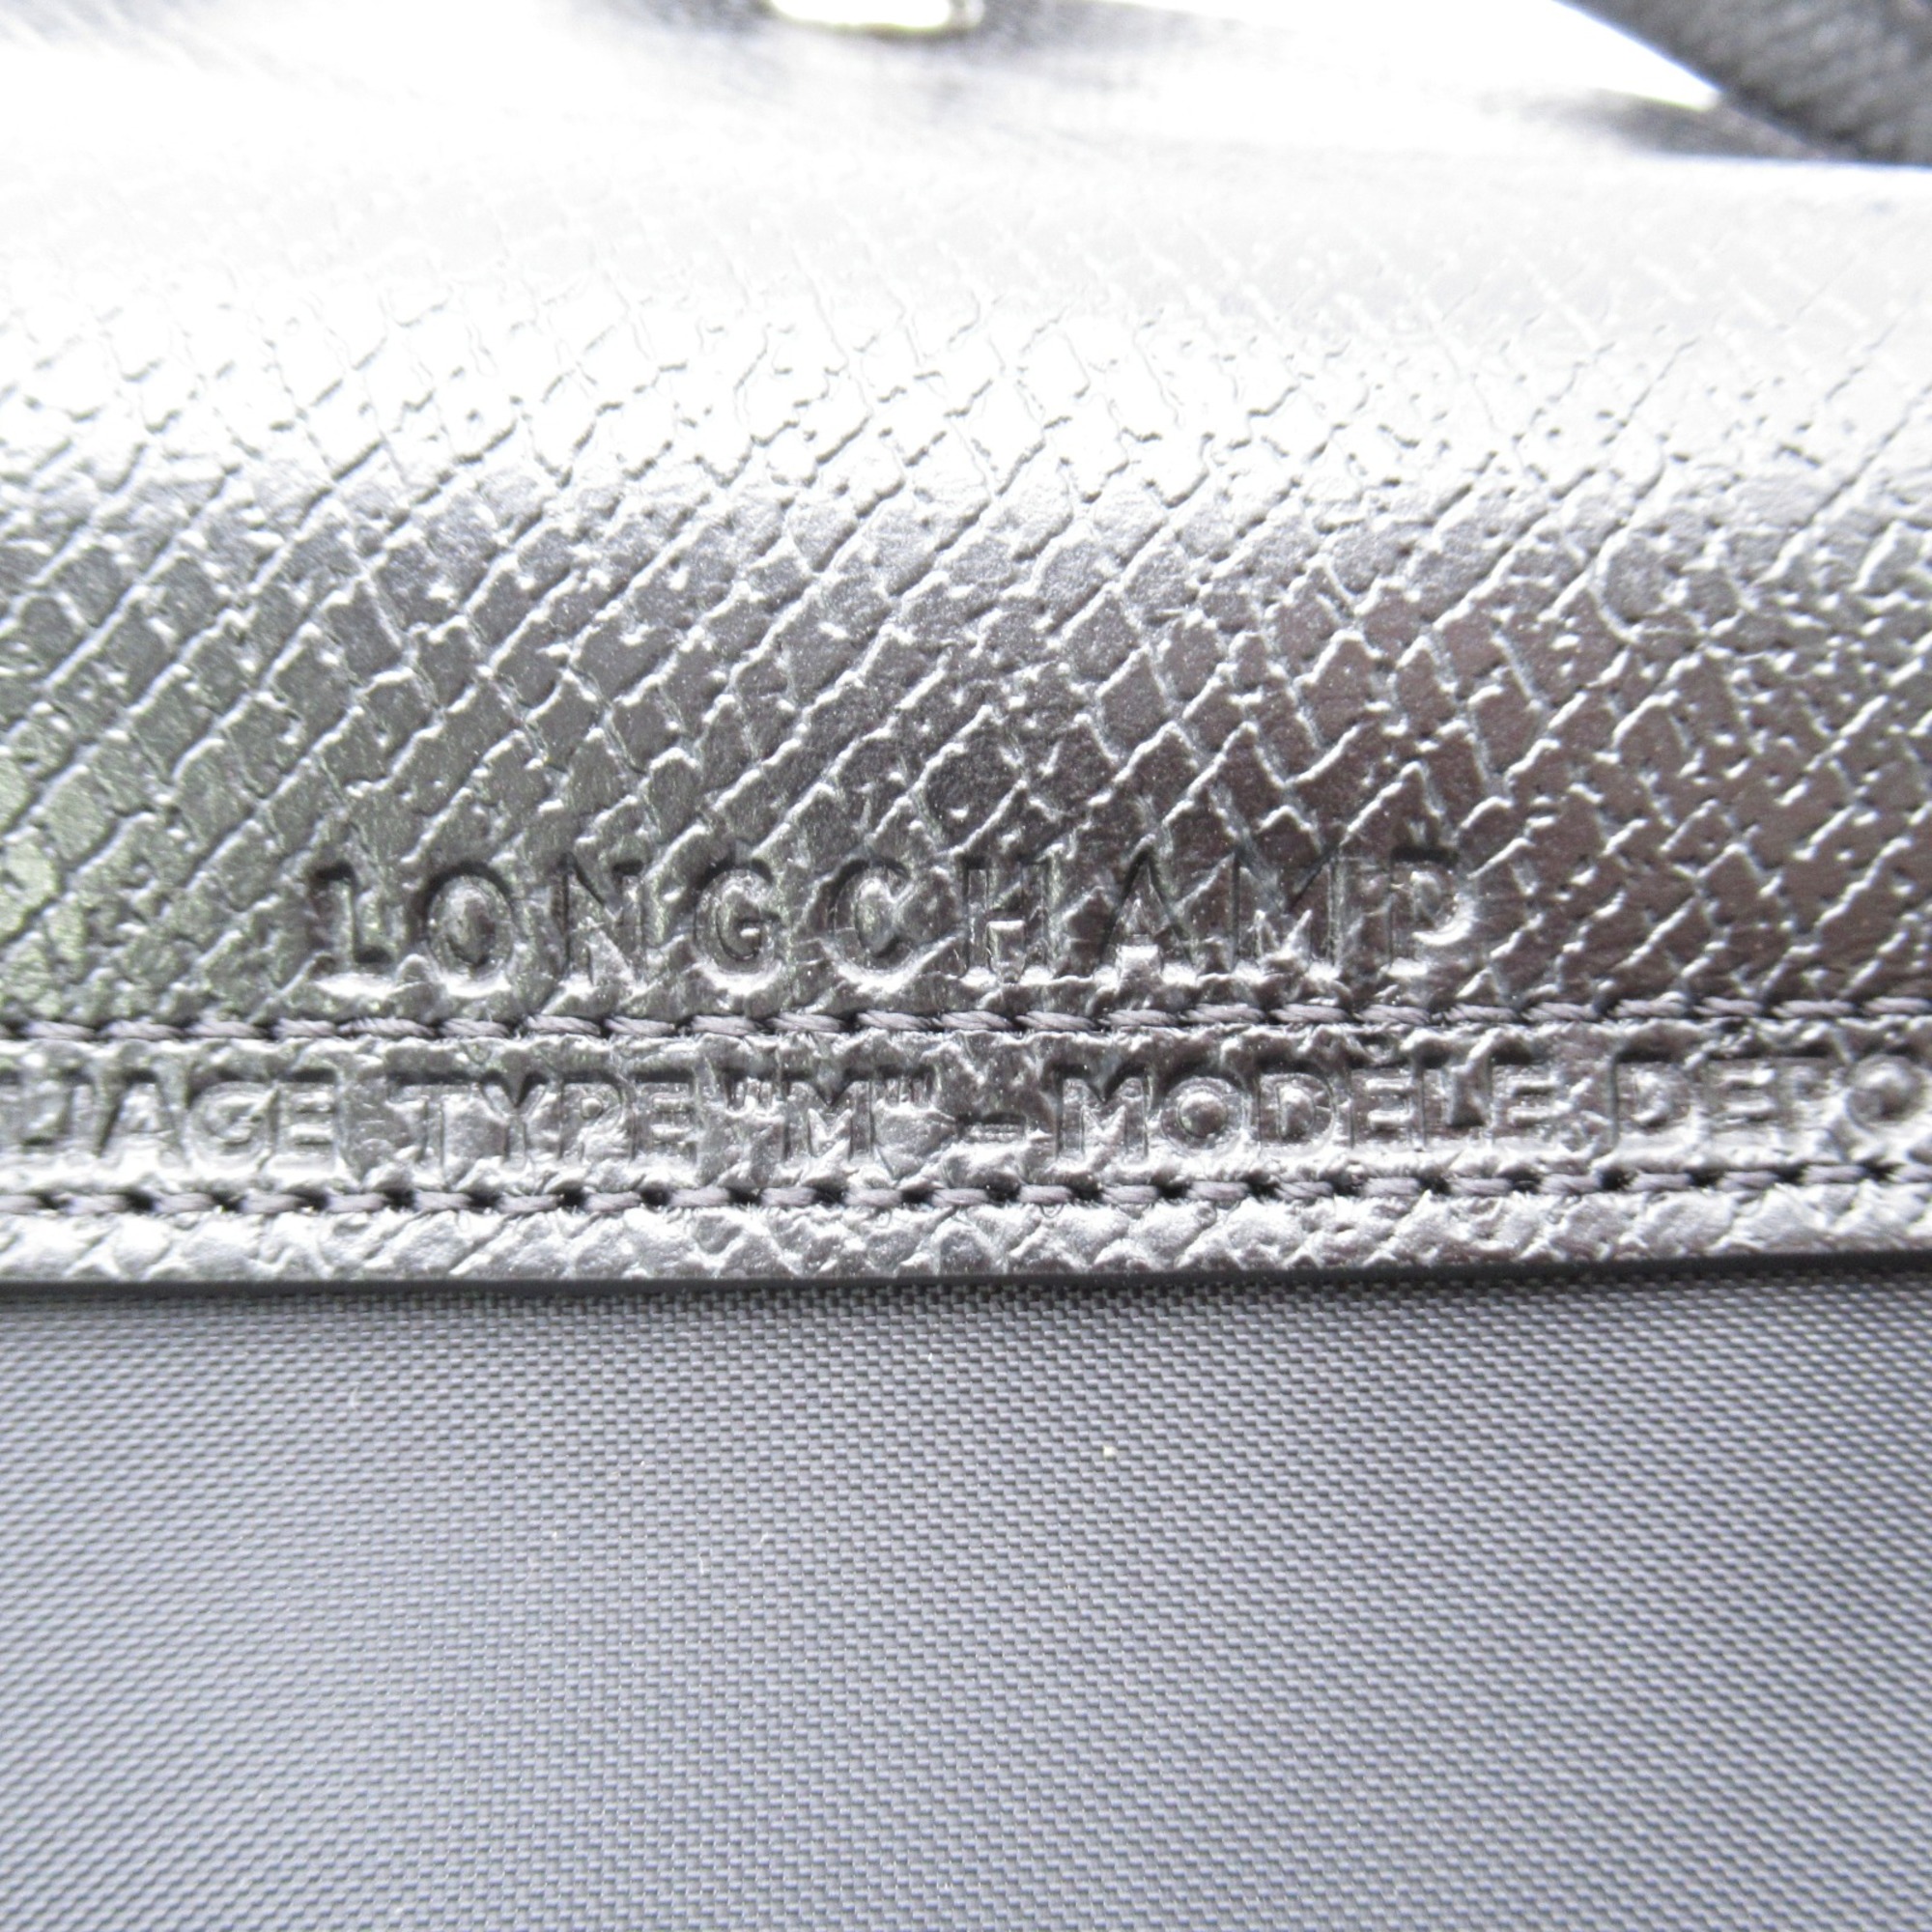 Longchamp Le Pliage Green M Top Handbag Black Noir recycled polyamide canvas L1623919001